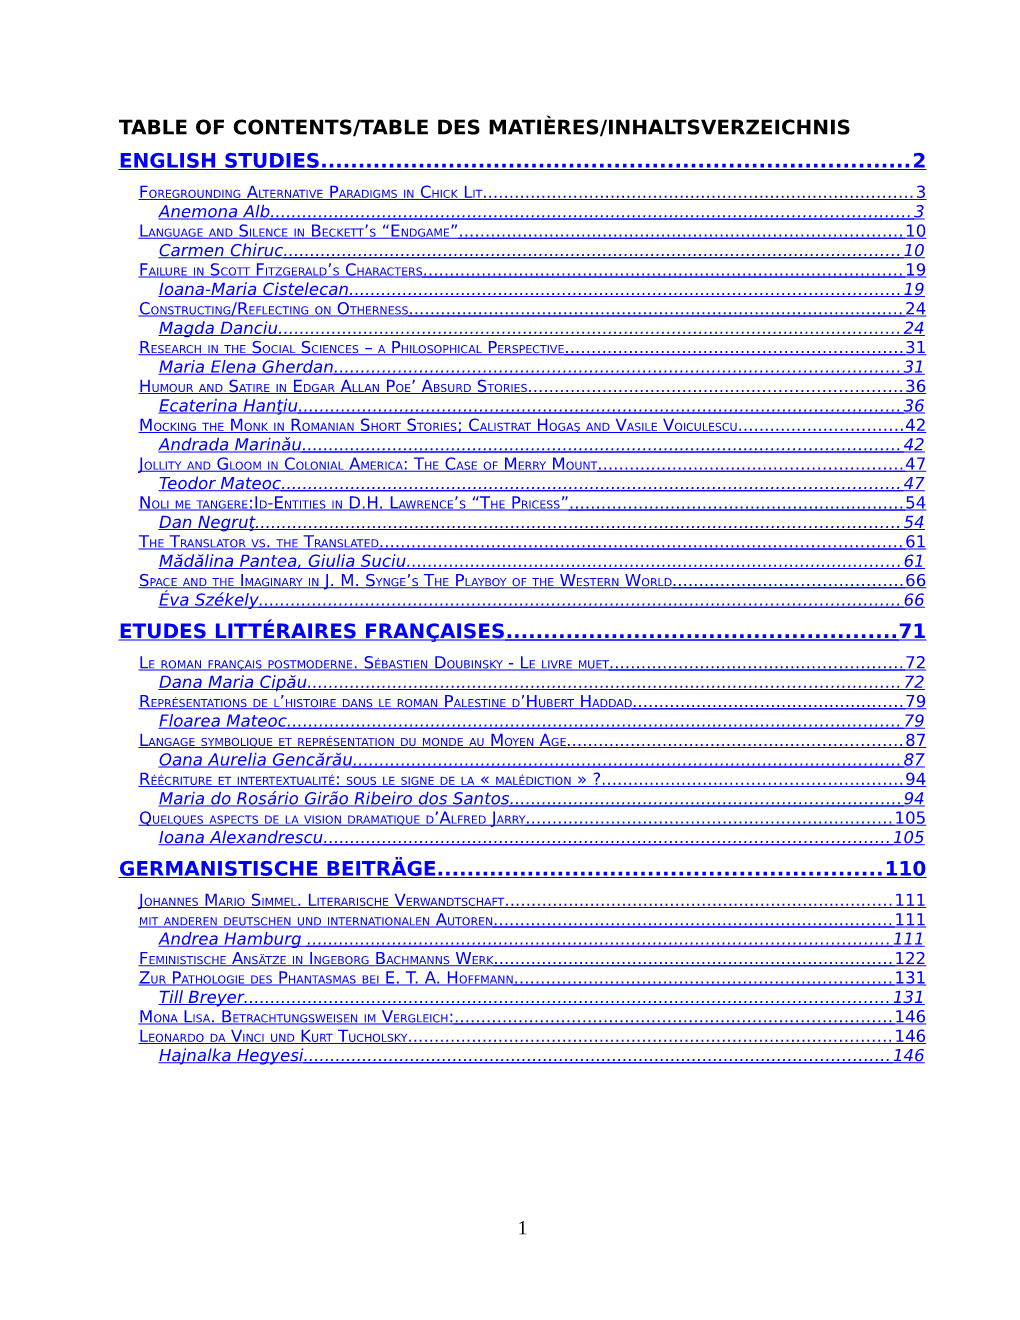 Table of Contents/Table Des Matières/Inhaltsverzeichnis English Studies